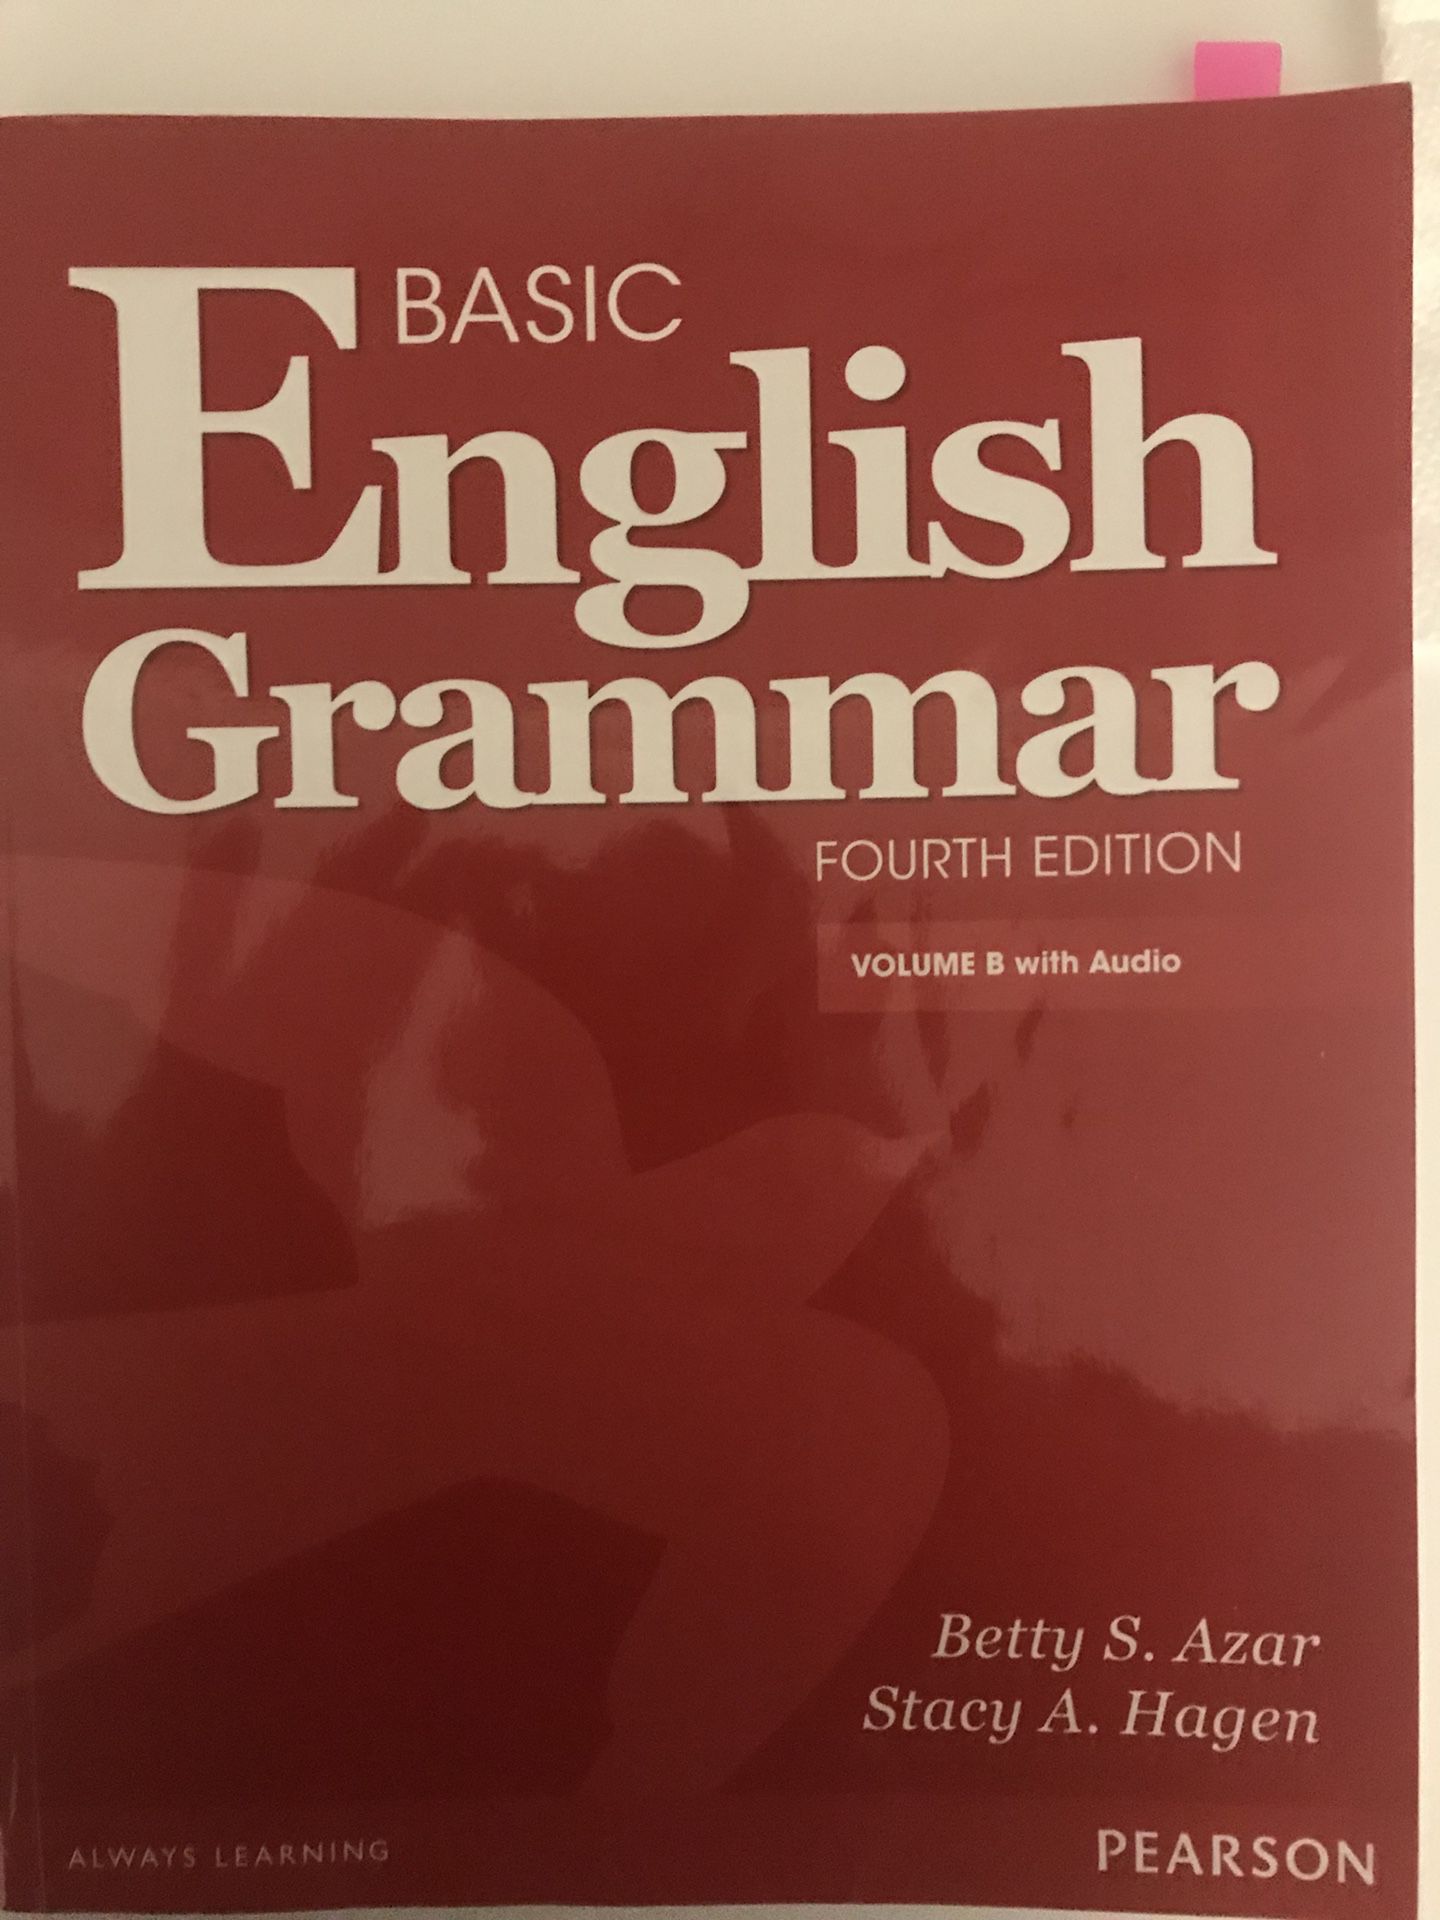 Basic English Grammar (fourth edition) volume B with Audio